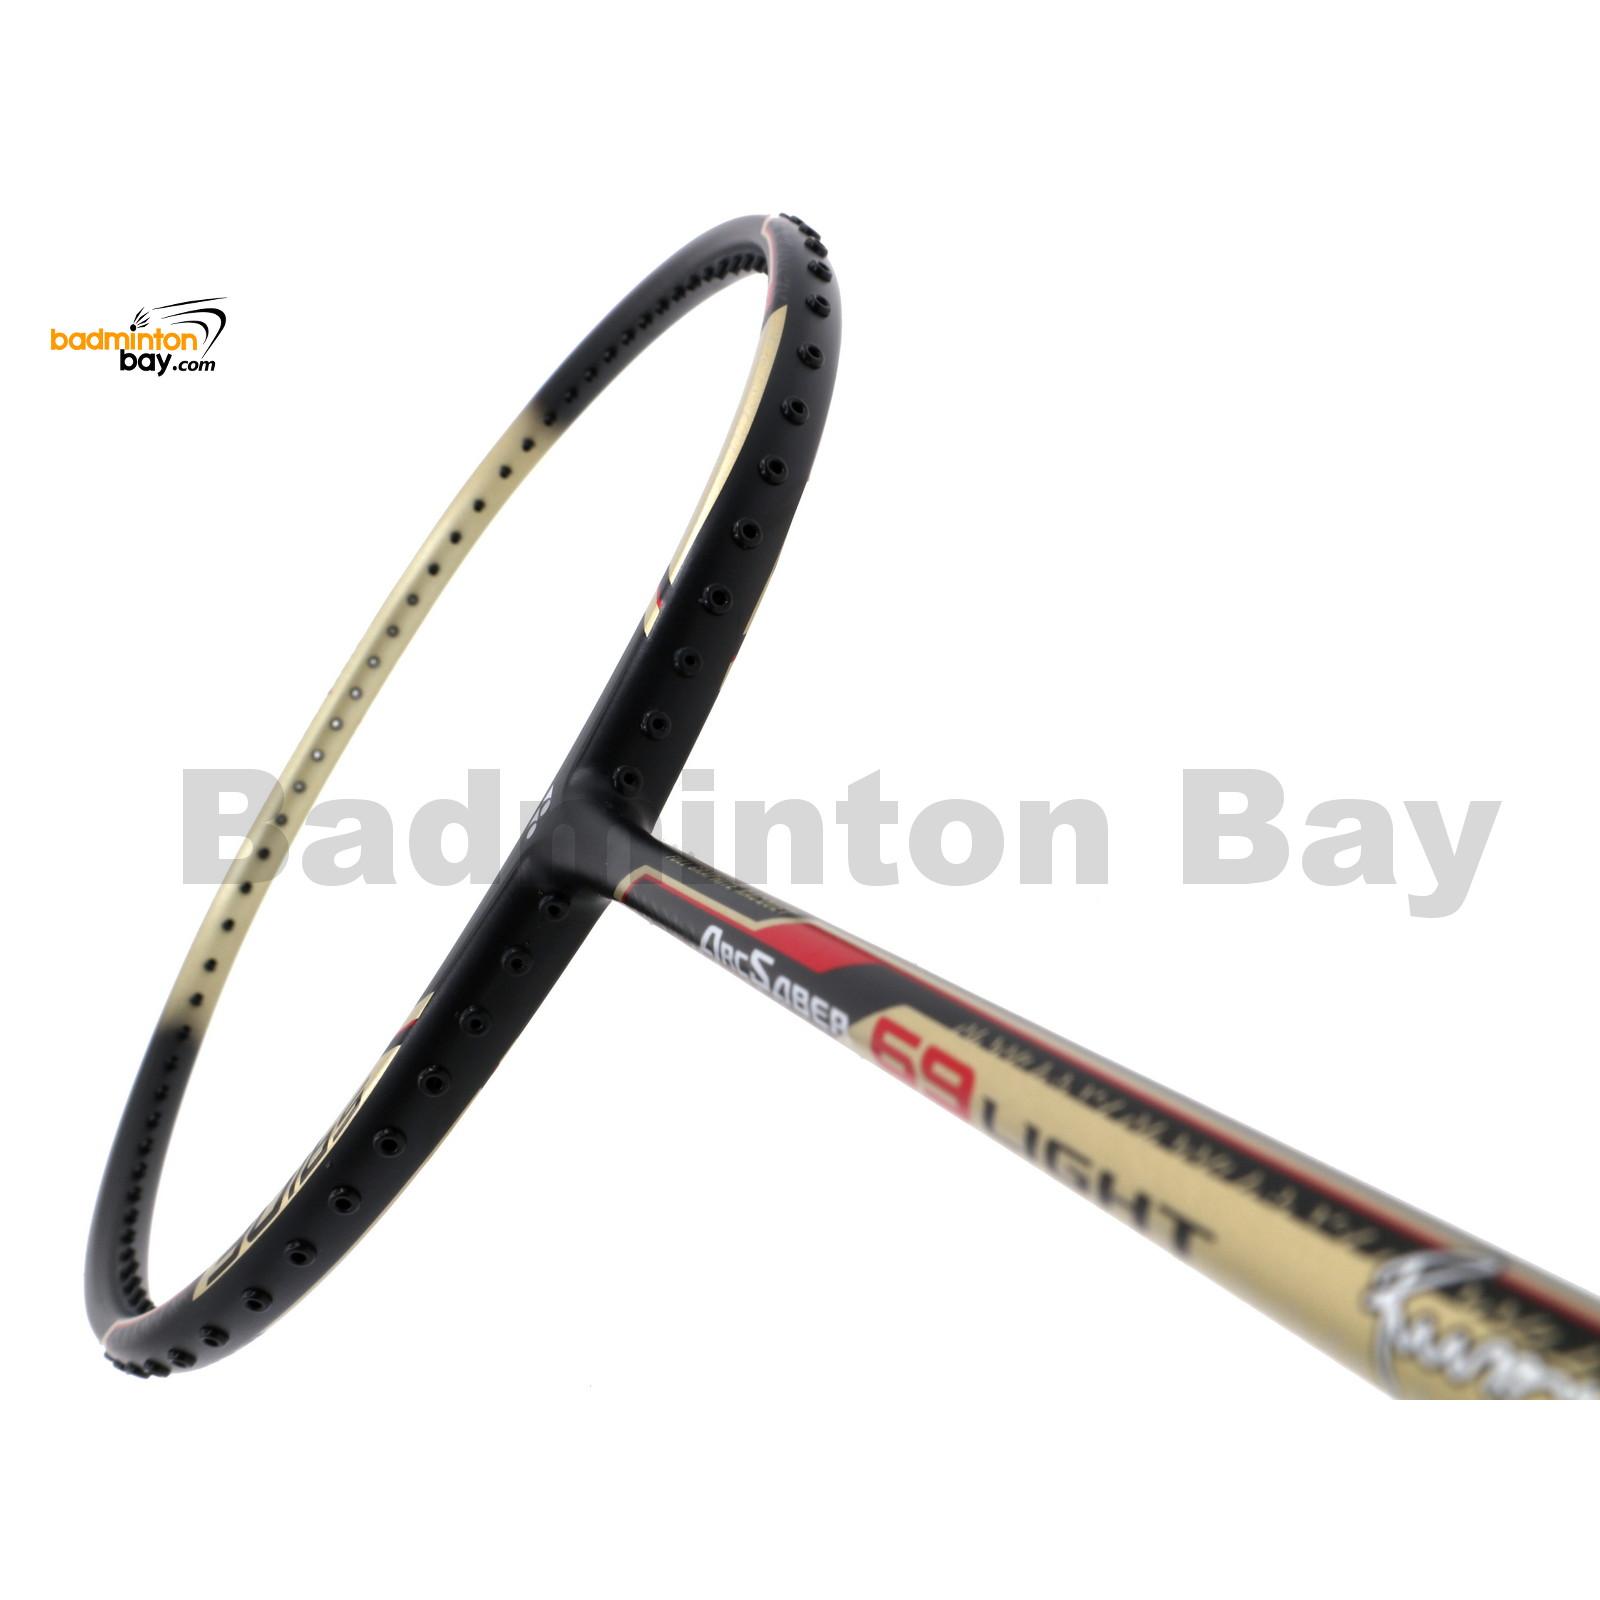 Yonex Arcsaber 69 Badminton Racquet Light Racket【Free Grip & String】 